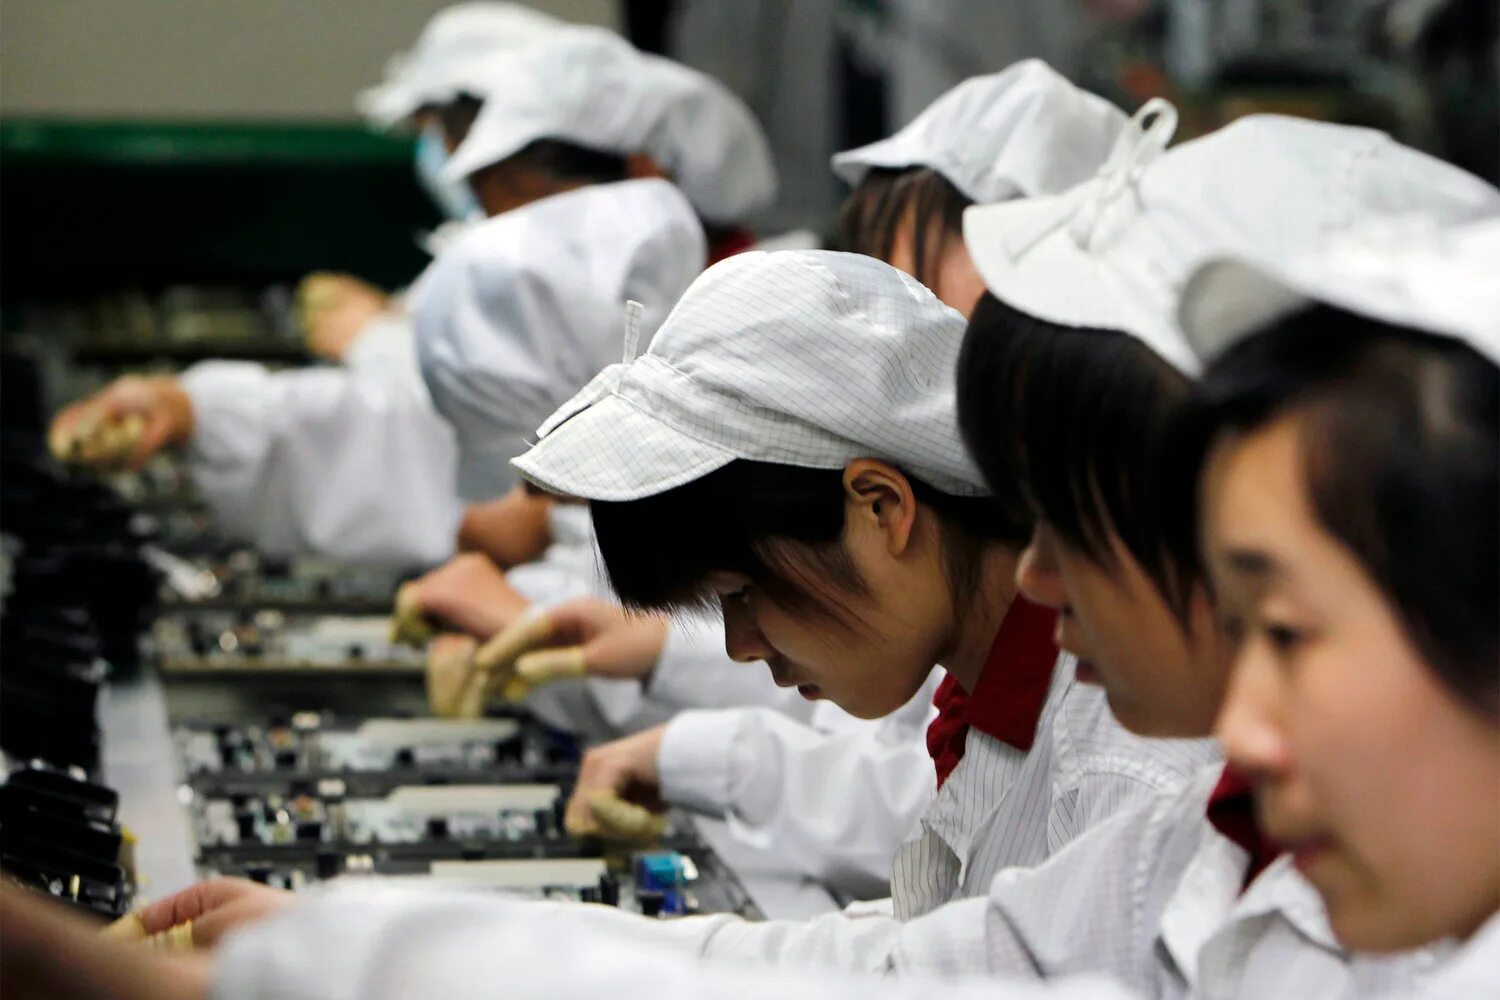 Фабрика Фоксконн Китай. Завод Foxconn в Китае. Китайцы на заводе. Труд в Китае.